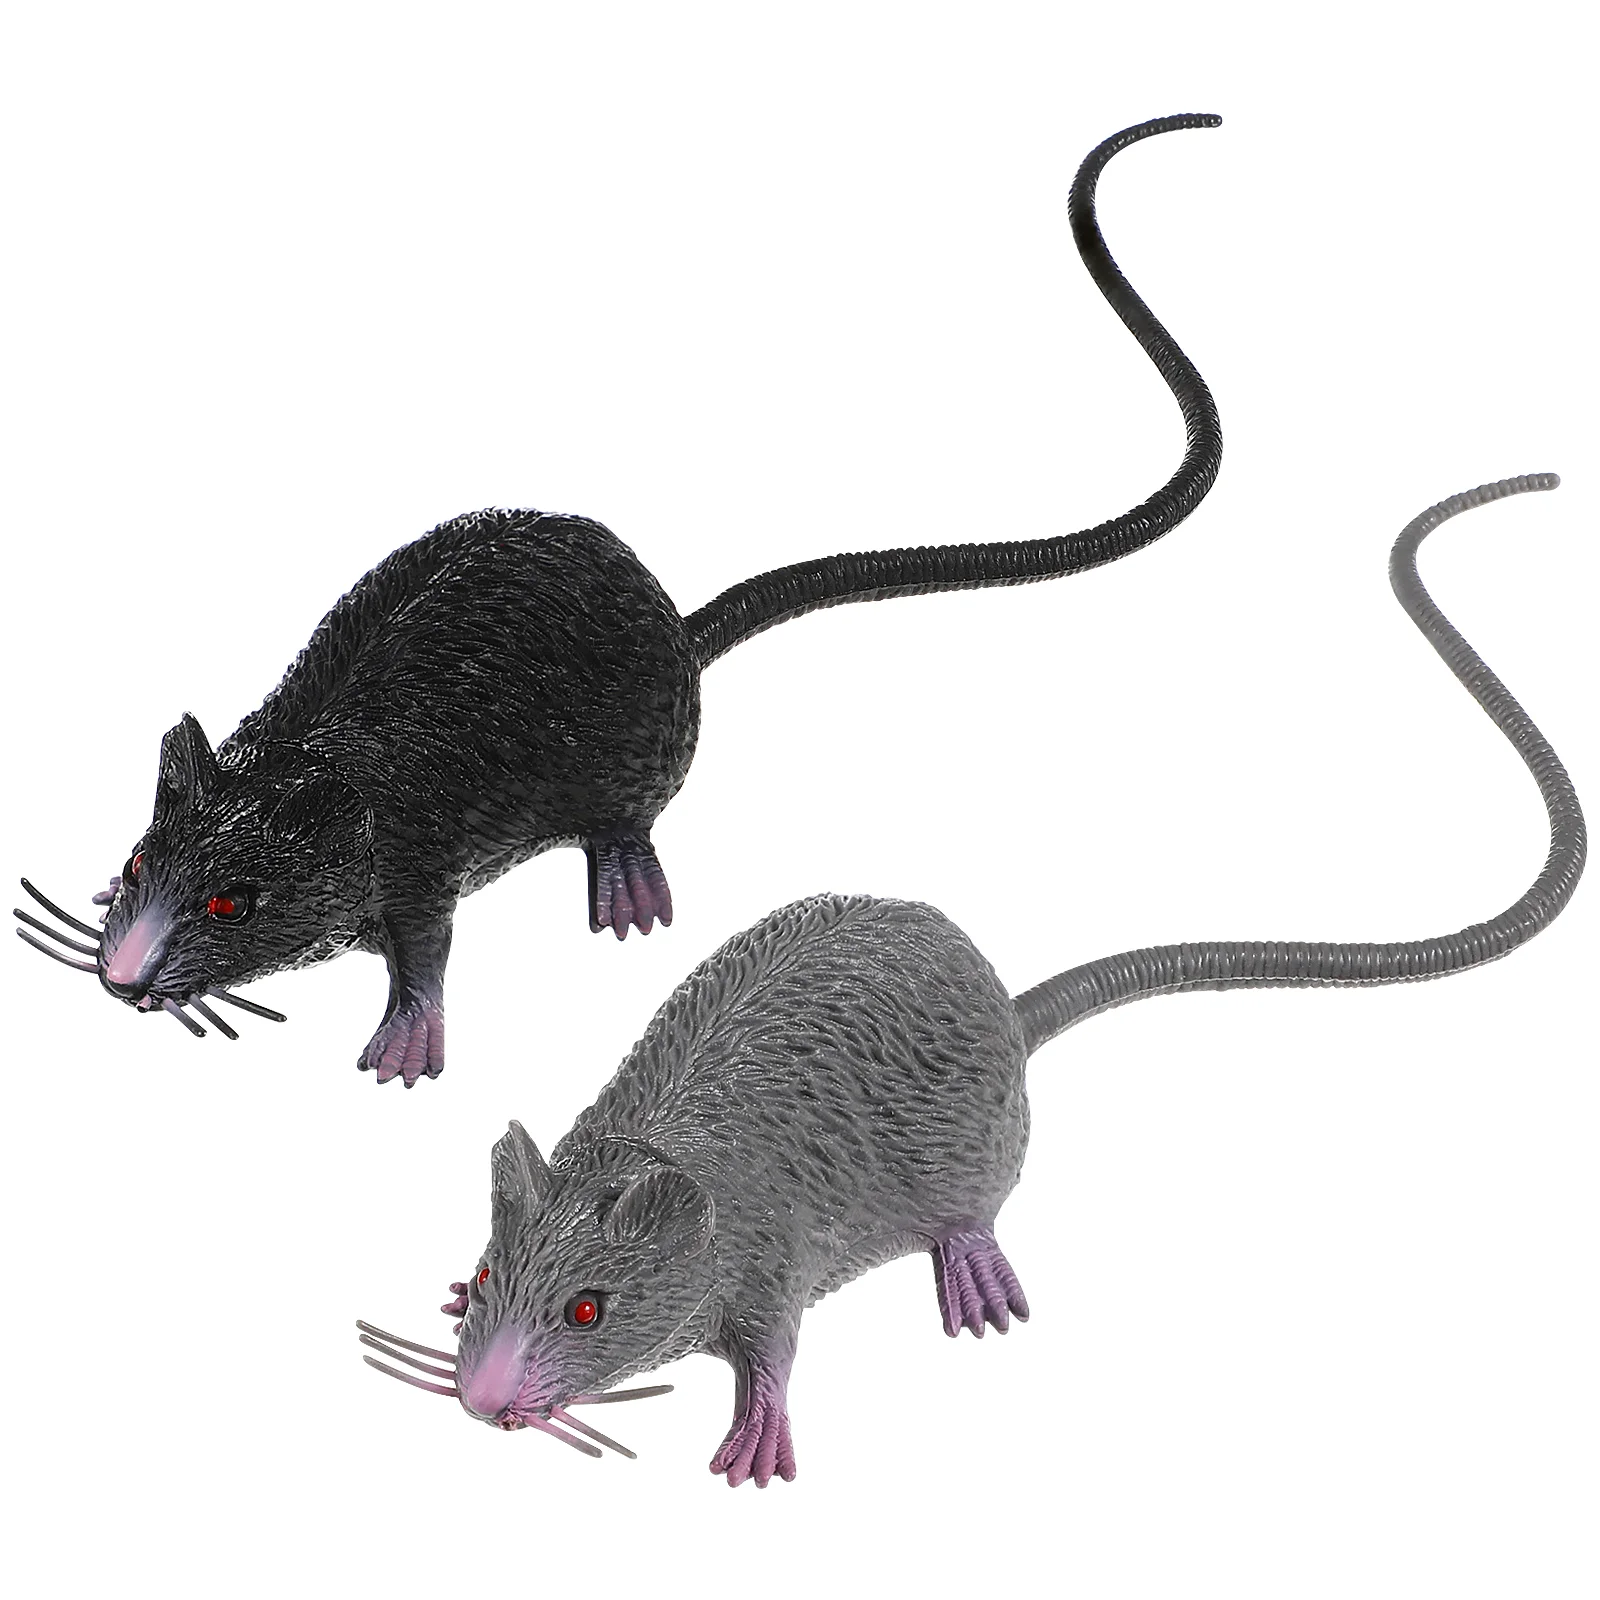 

2pcs Mouse Model Lifelike Rat Figurines Mice Horrible Gag for Joke Decoration ( Black, Gray )